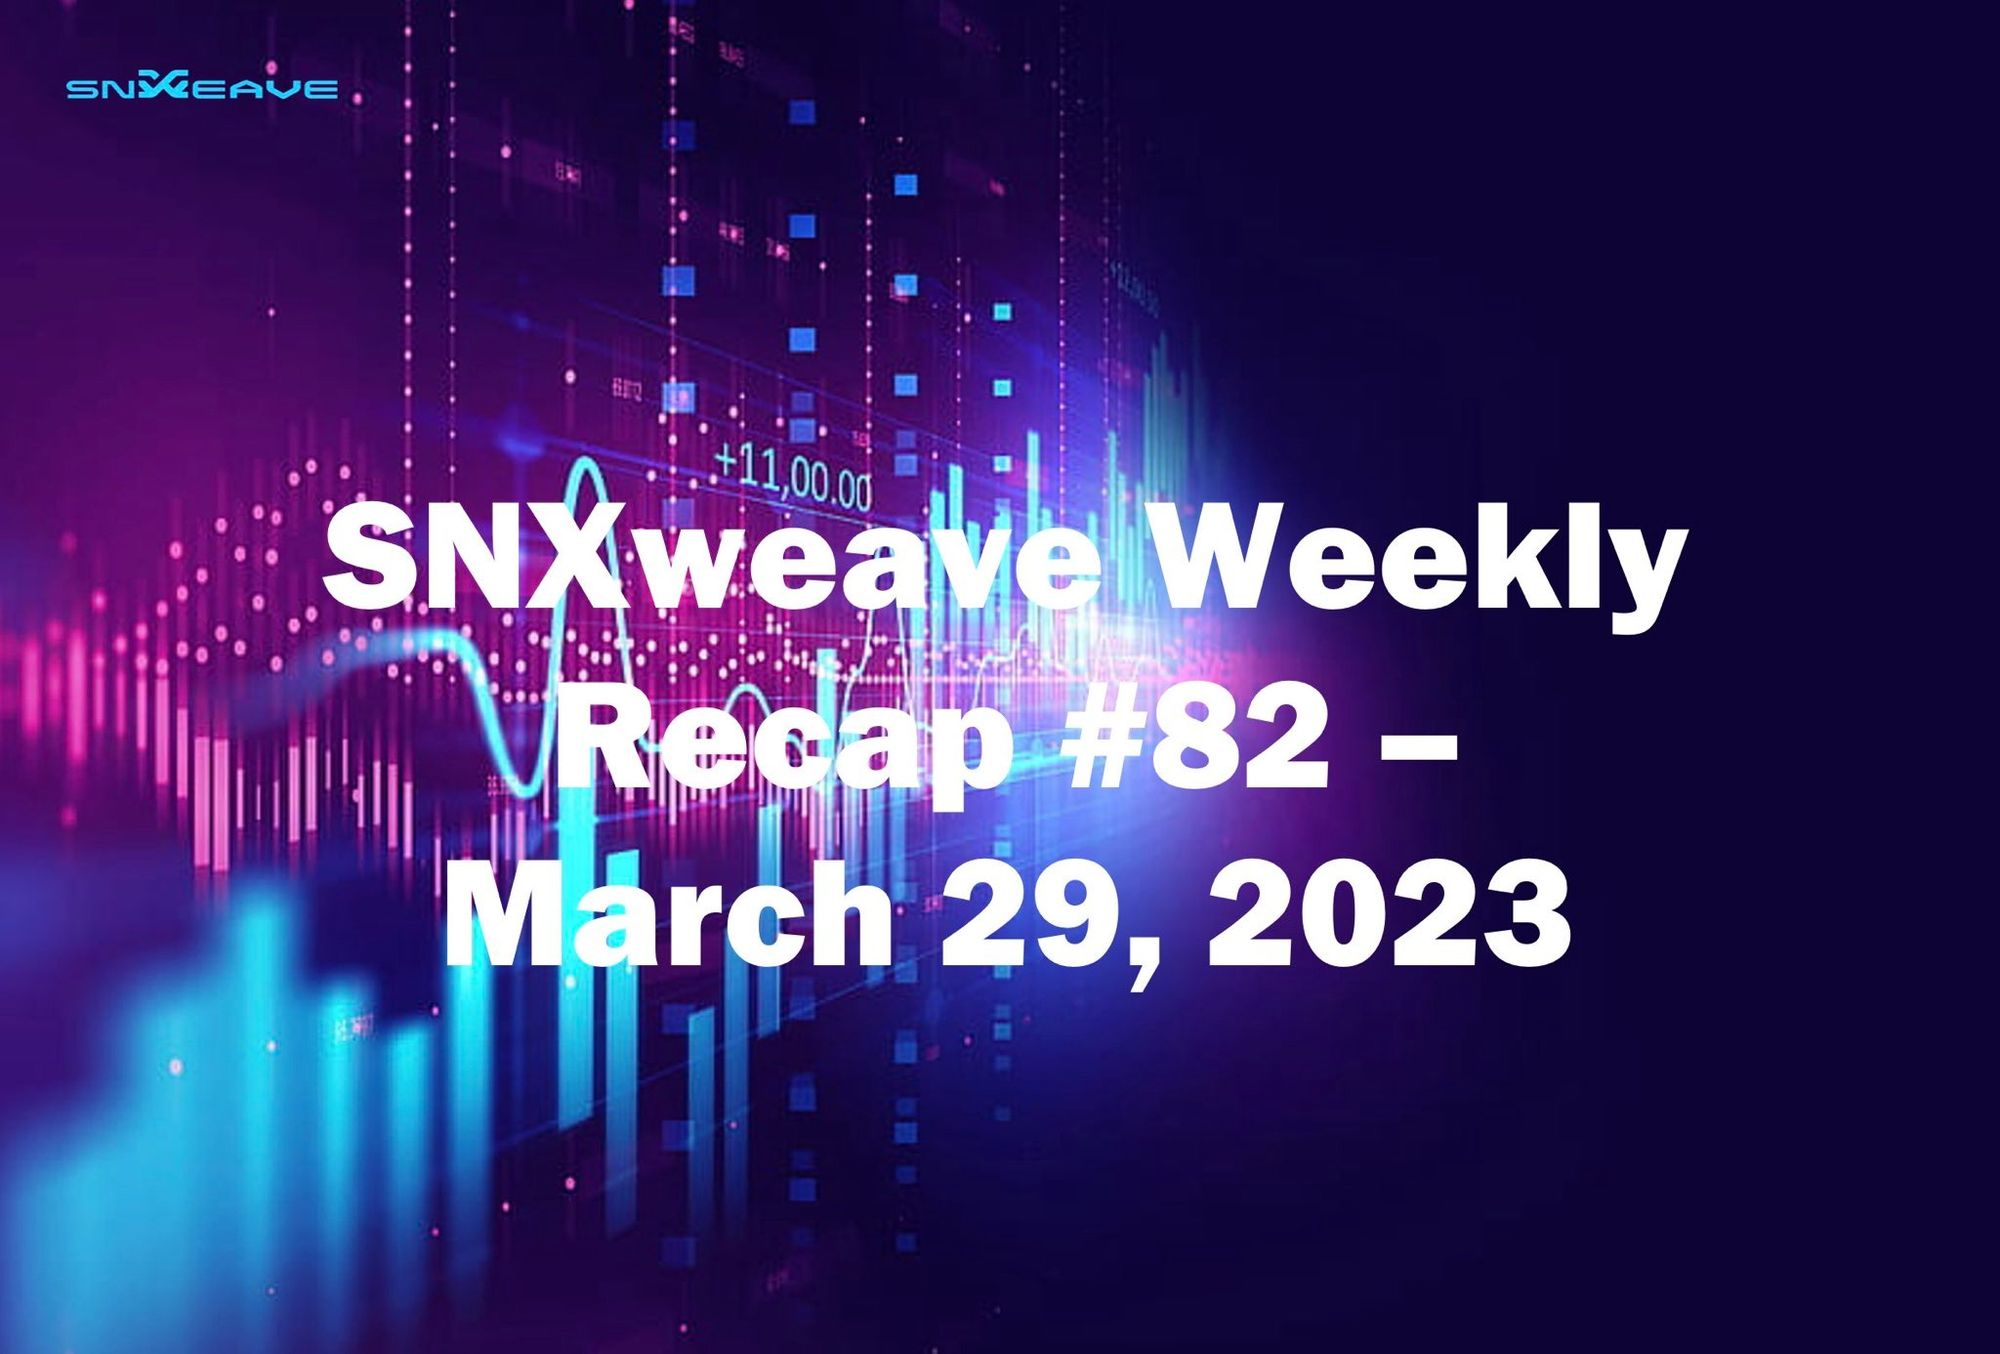 SNXweave Weekly Recap 82